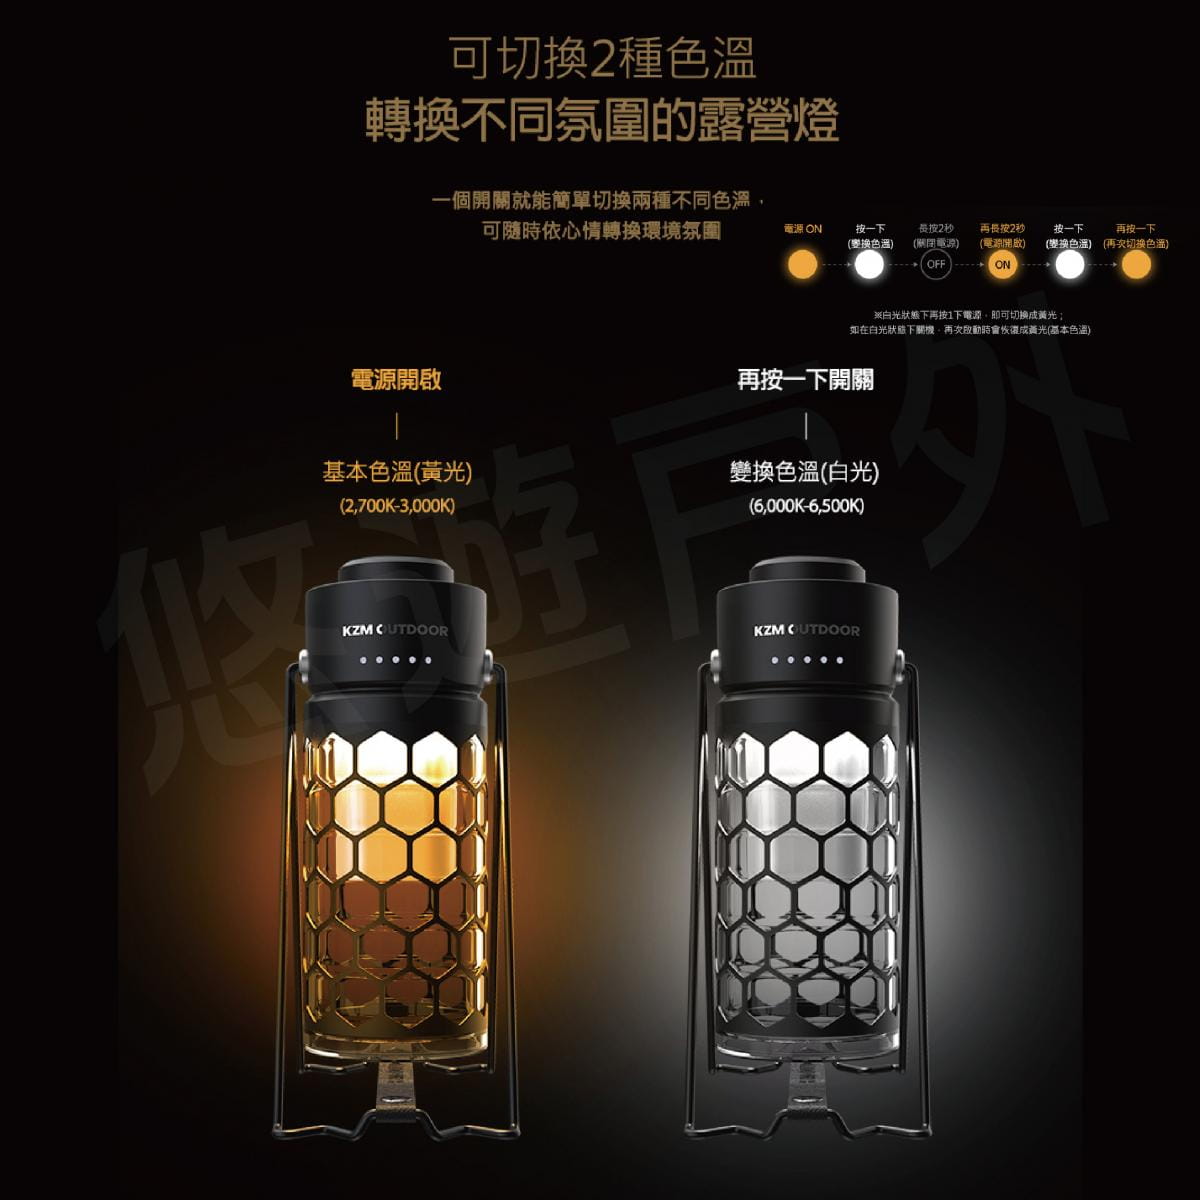 【KZM】風潮LED復古露營燈 K21T3O01 (悠遊戶外) 5